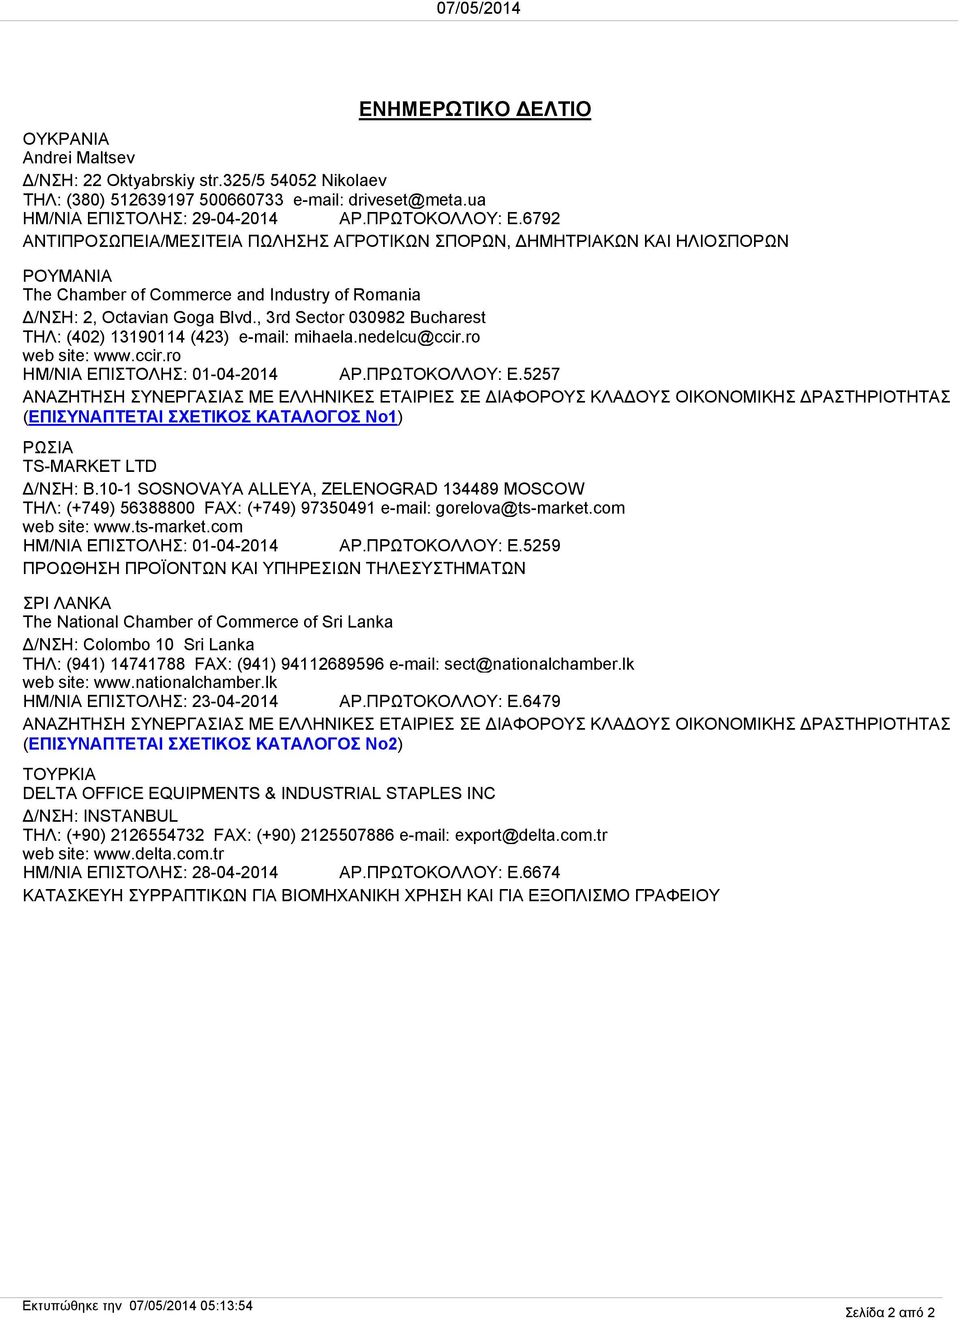 , 3rd Sector 030982 Bucharest ΤΗΛ: (402) 13190114 (423) e-mail: mihaela.nedelcu@ccir.ro web site: www.ccir.ro ΗΜ/ΝΙΑ ΕΠΙΣΤΟΛΗΣ: 01-04-2014 ΑΡ.ΠΡΩΤΟΚΟΛΛΟΥ: Ε.